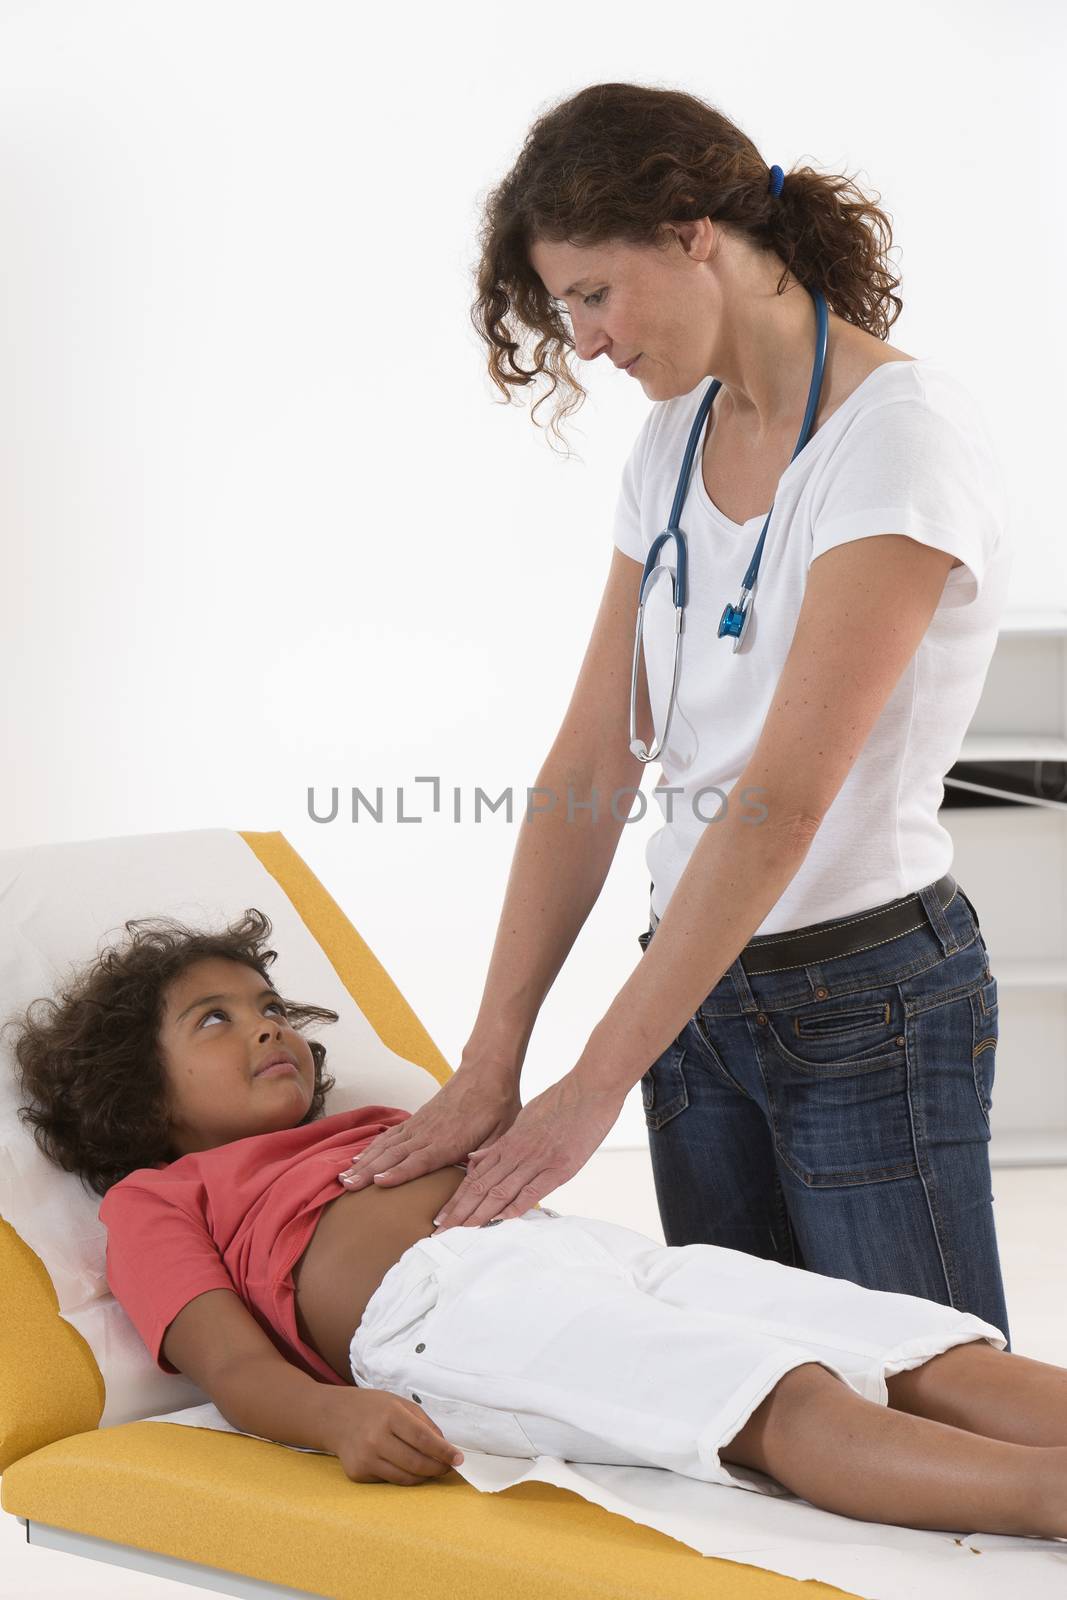 Image of pediatrician doing abdominal examination